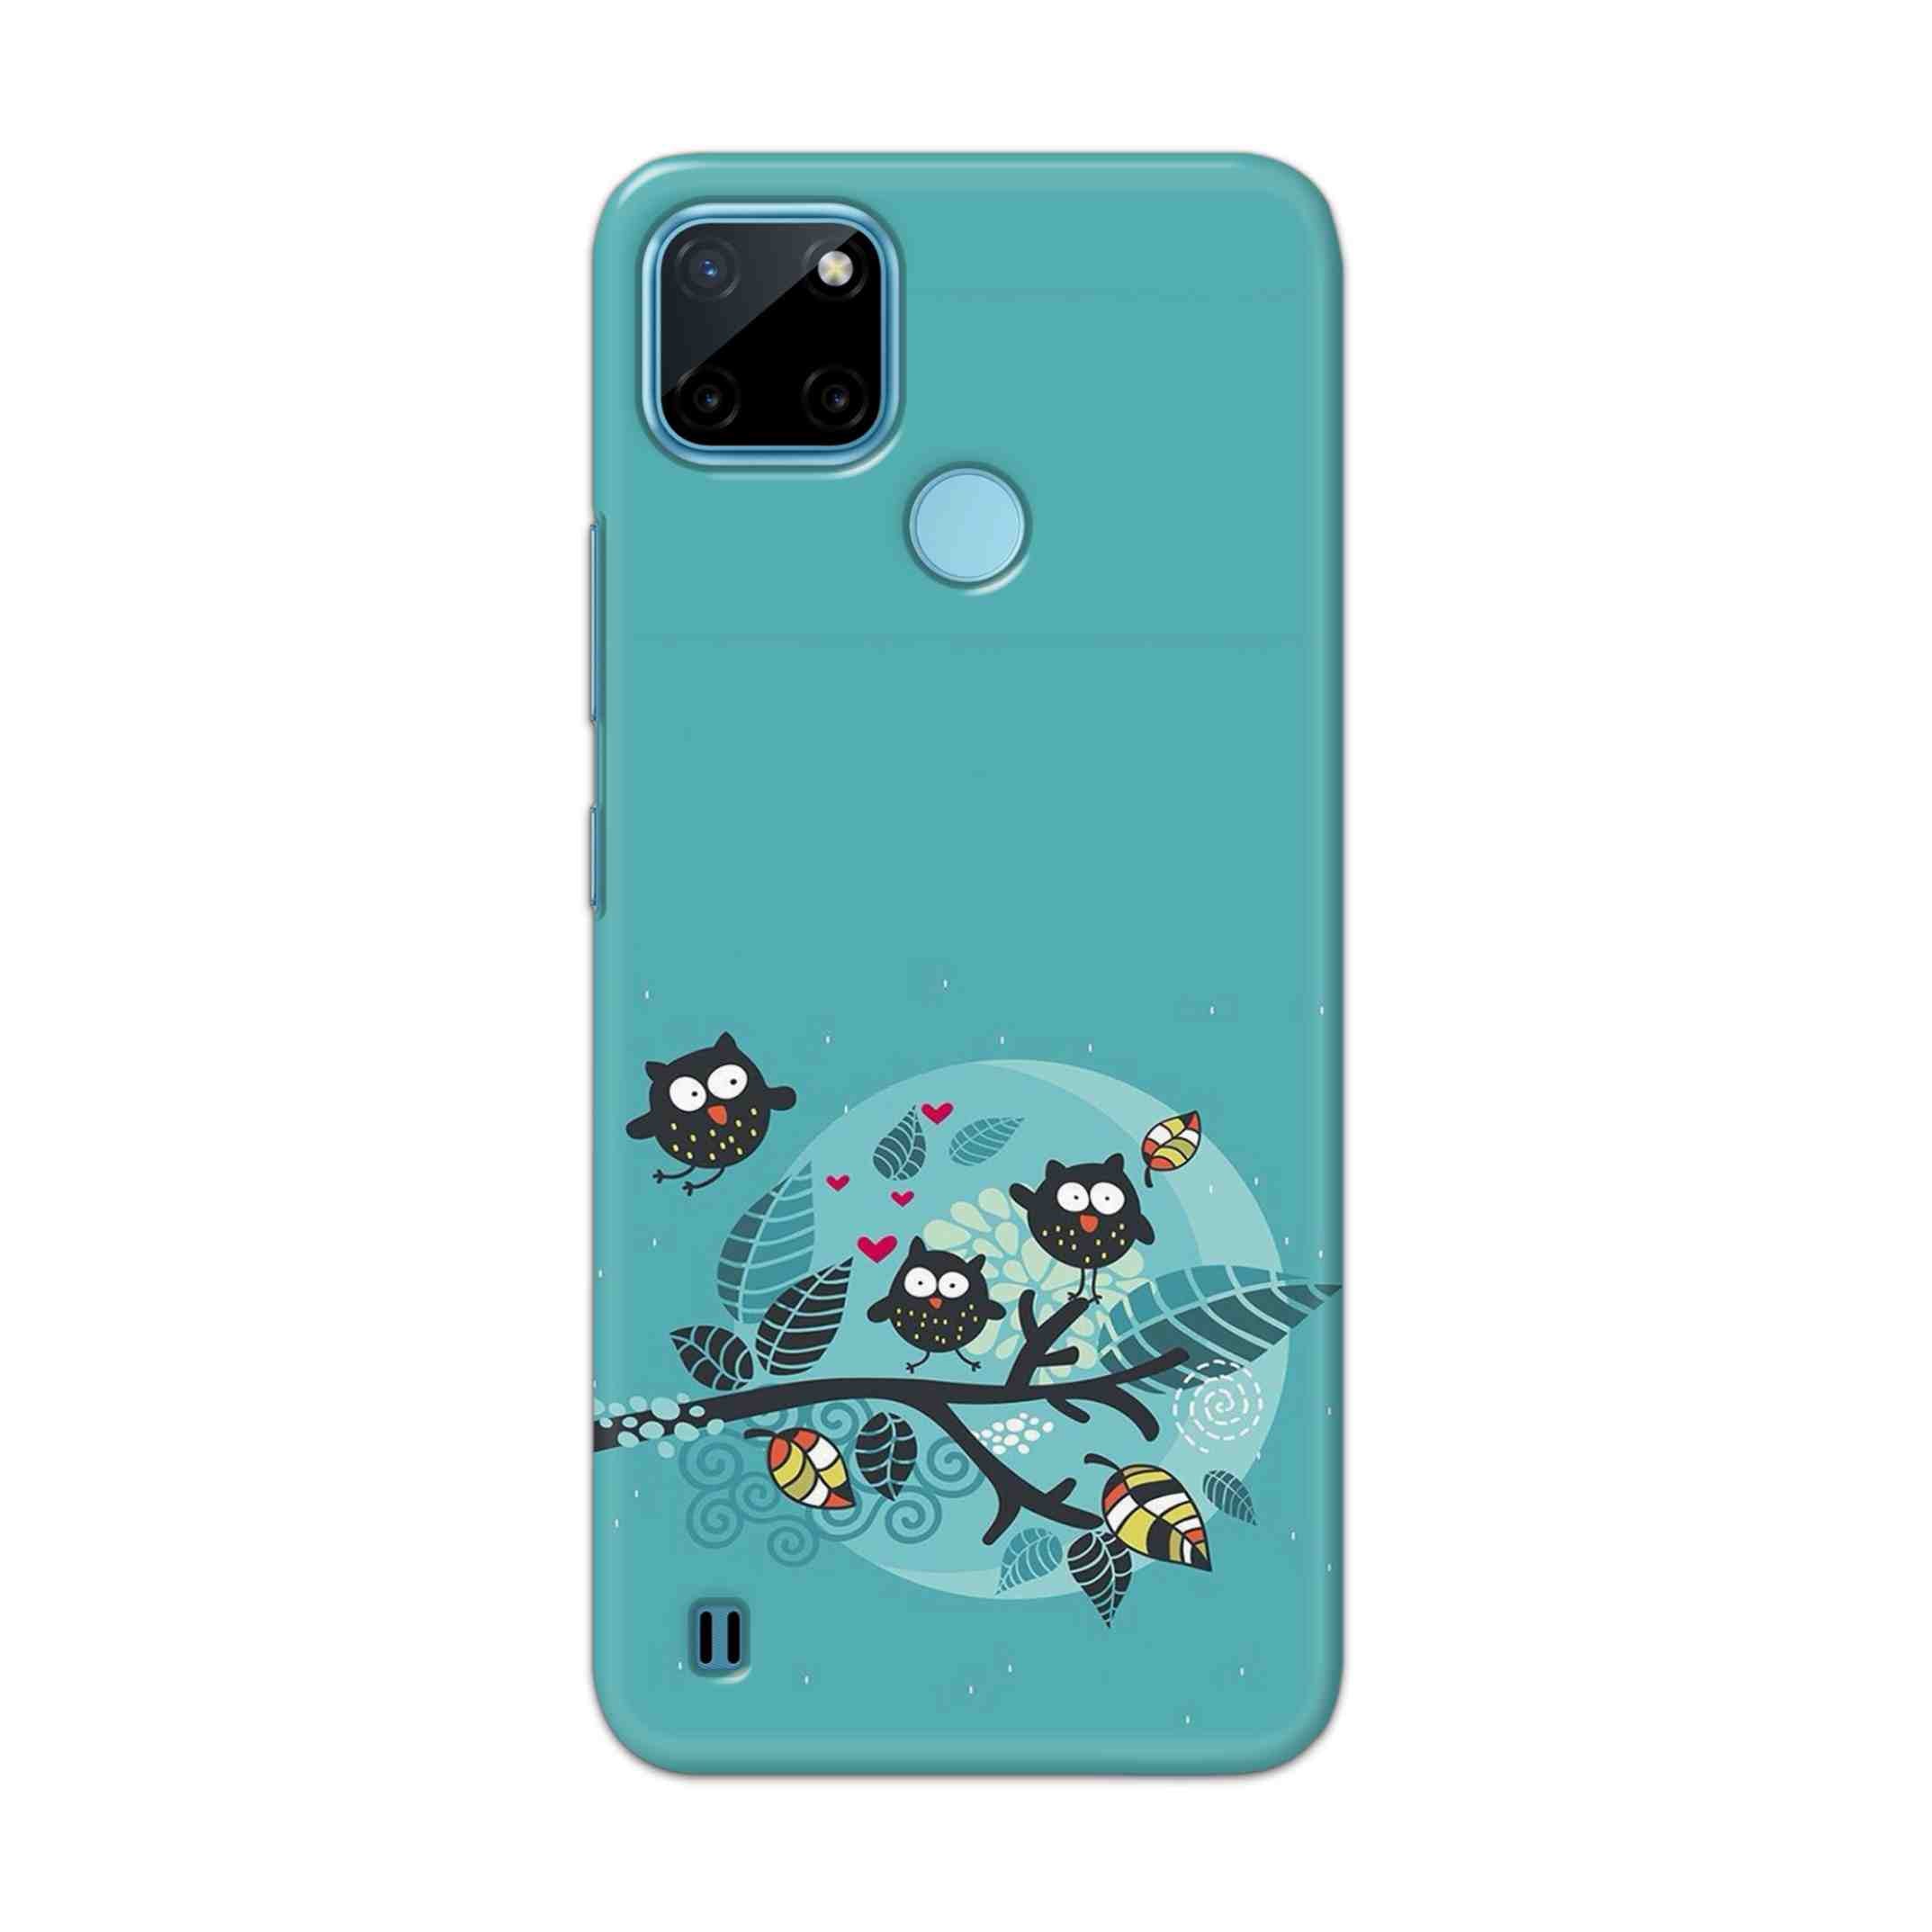 Buy Owl Hard Back Mobile Phone Case Cover For Realme C21Y Online